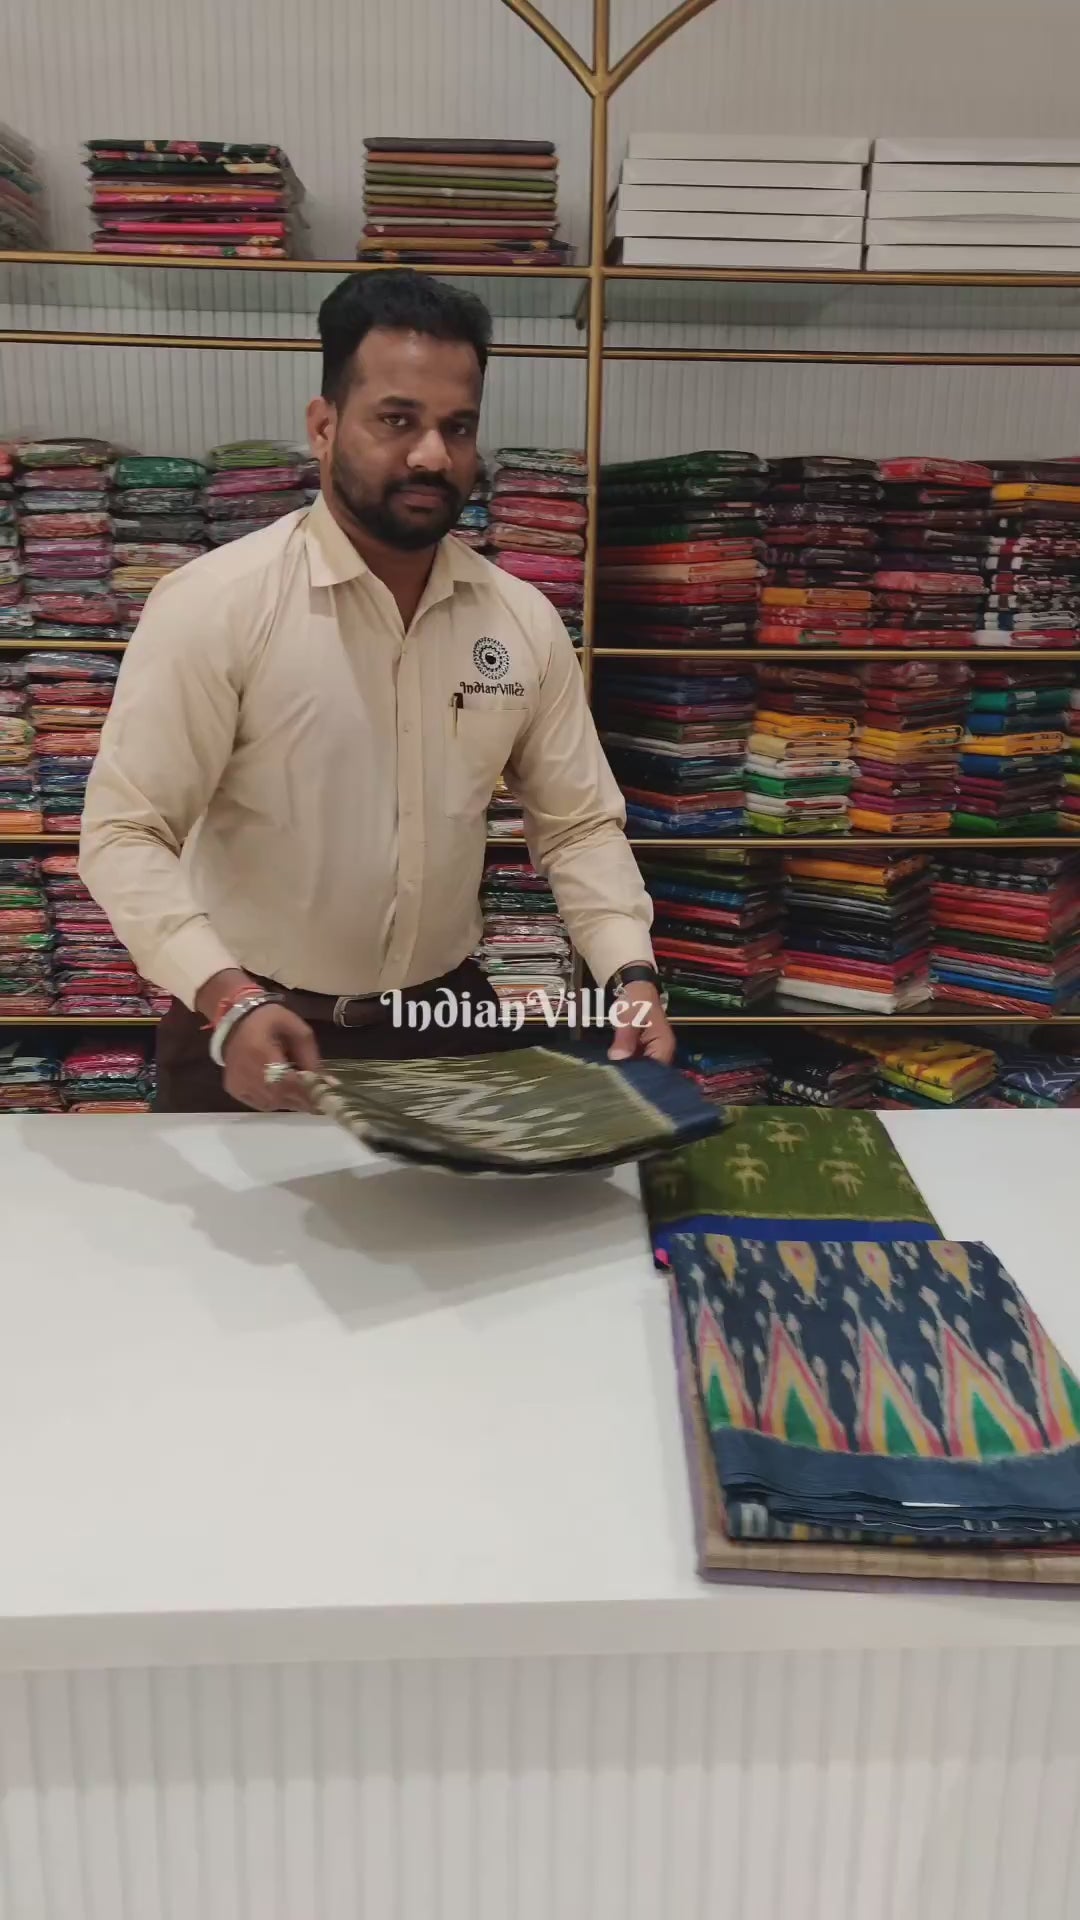 Mehendi Green Gopalpur Tussar Silk Saree